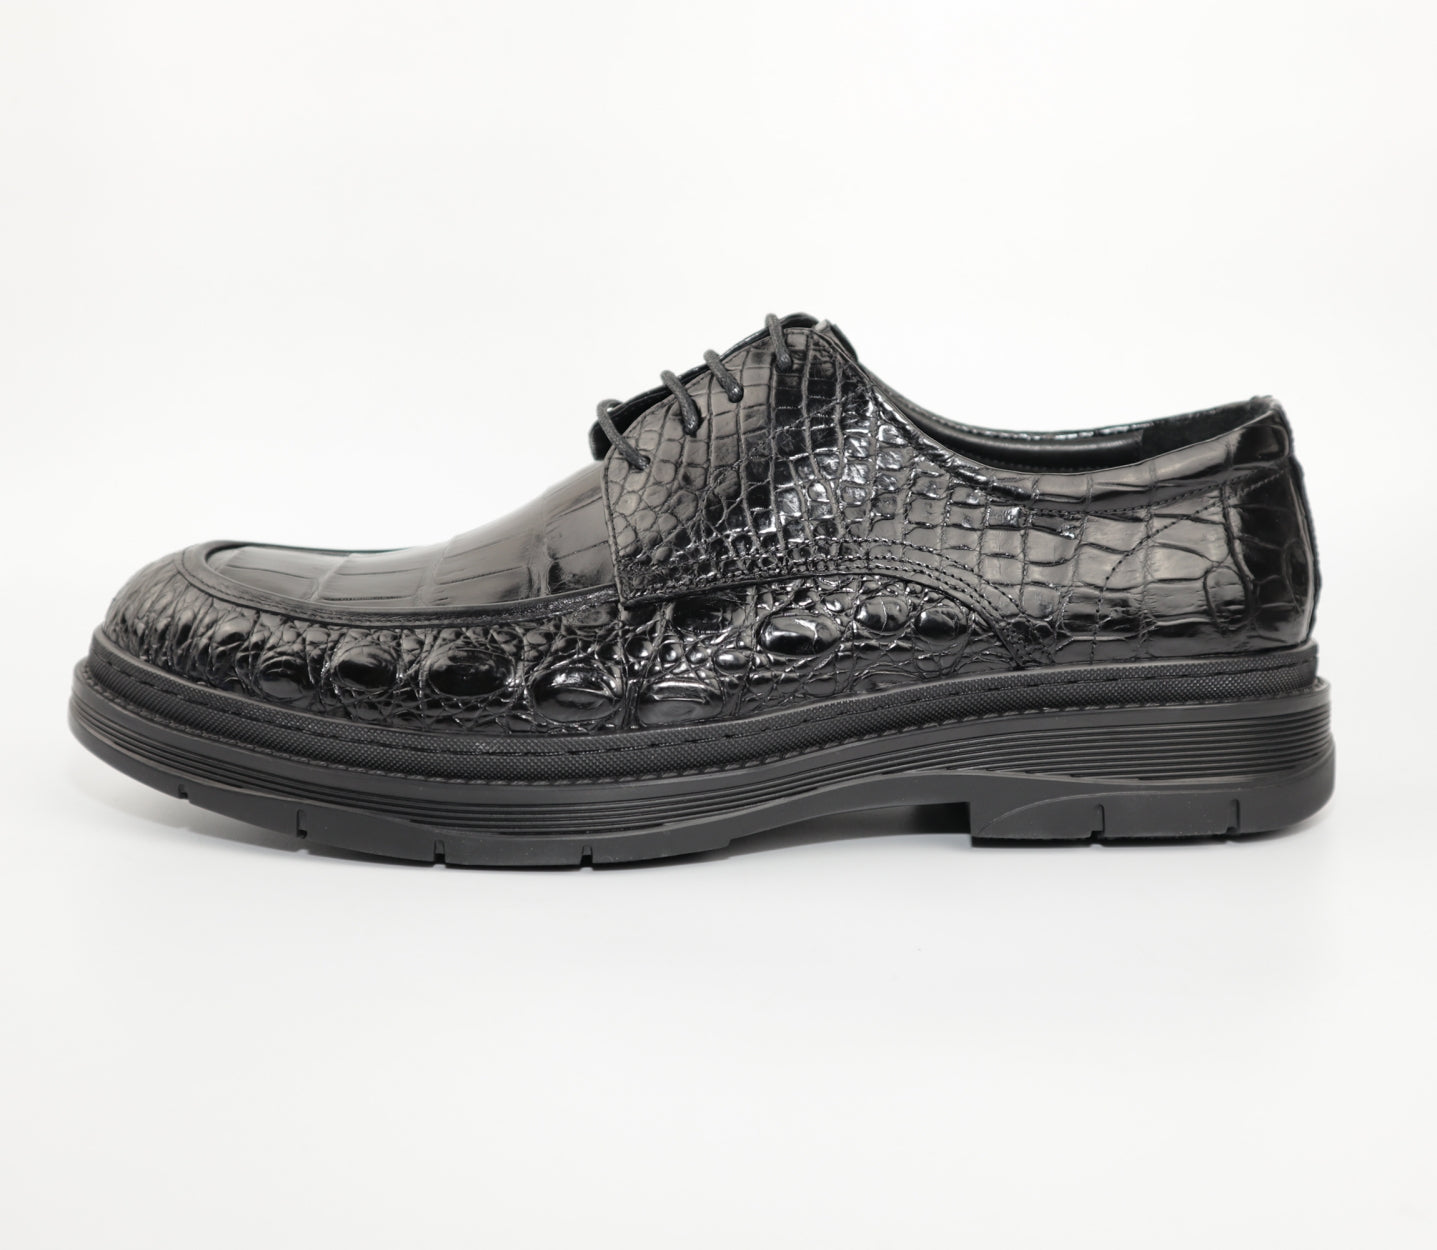 Men's Shoes Genuine Crocodile Alligator Skin Leather Handmade Black Size 7 - Size 11US #301